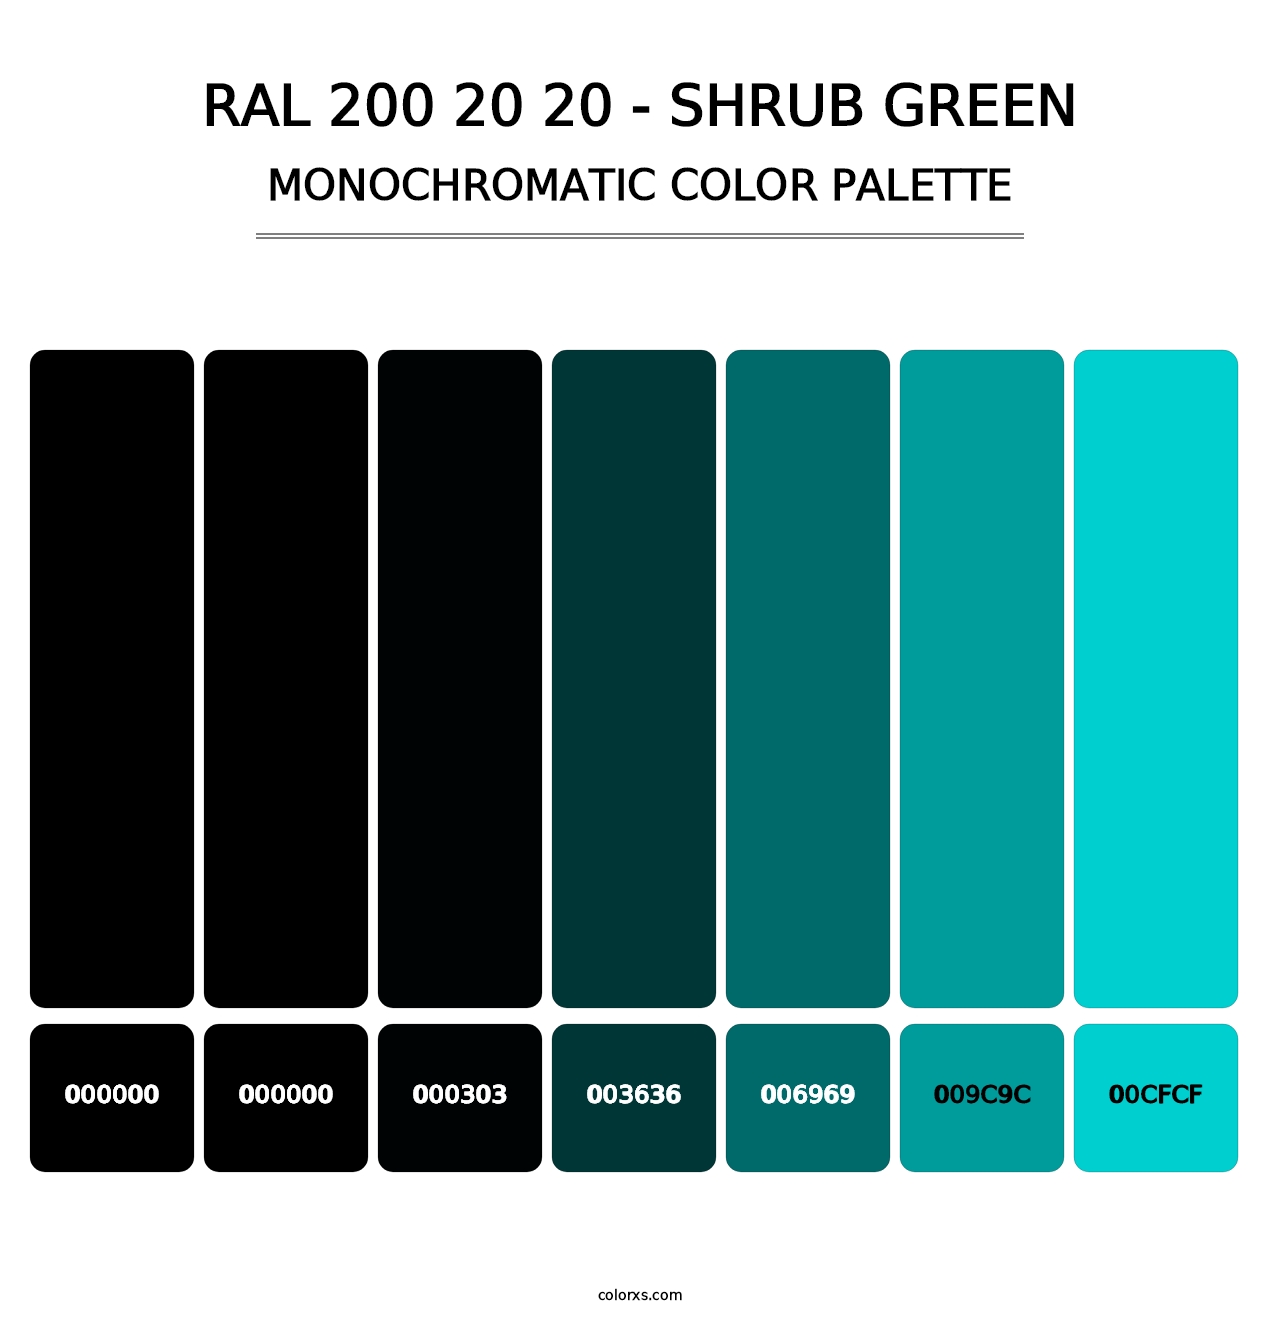 RAL 200 20 20 - Shrub Green - Monochromatic Color Palette